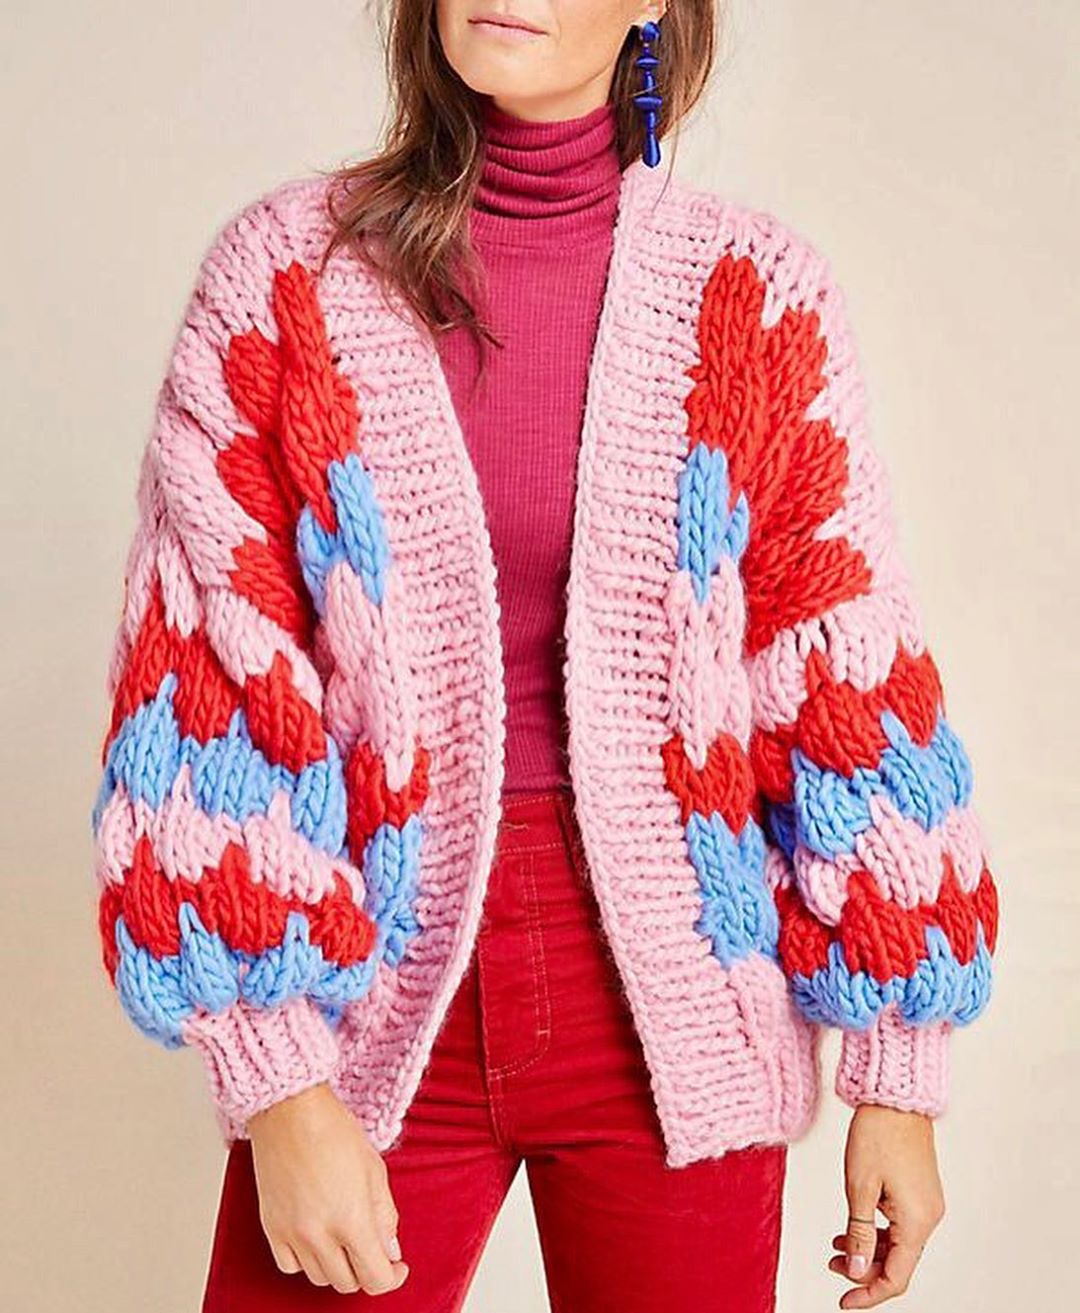 Designed Handmade Knitted Cardigan Sweaters